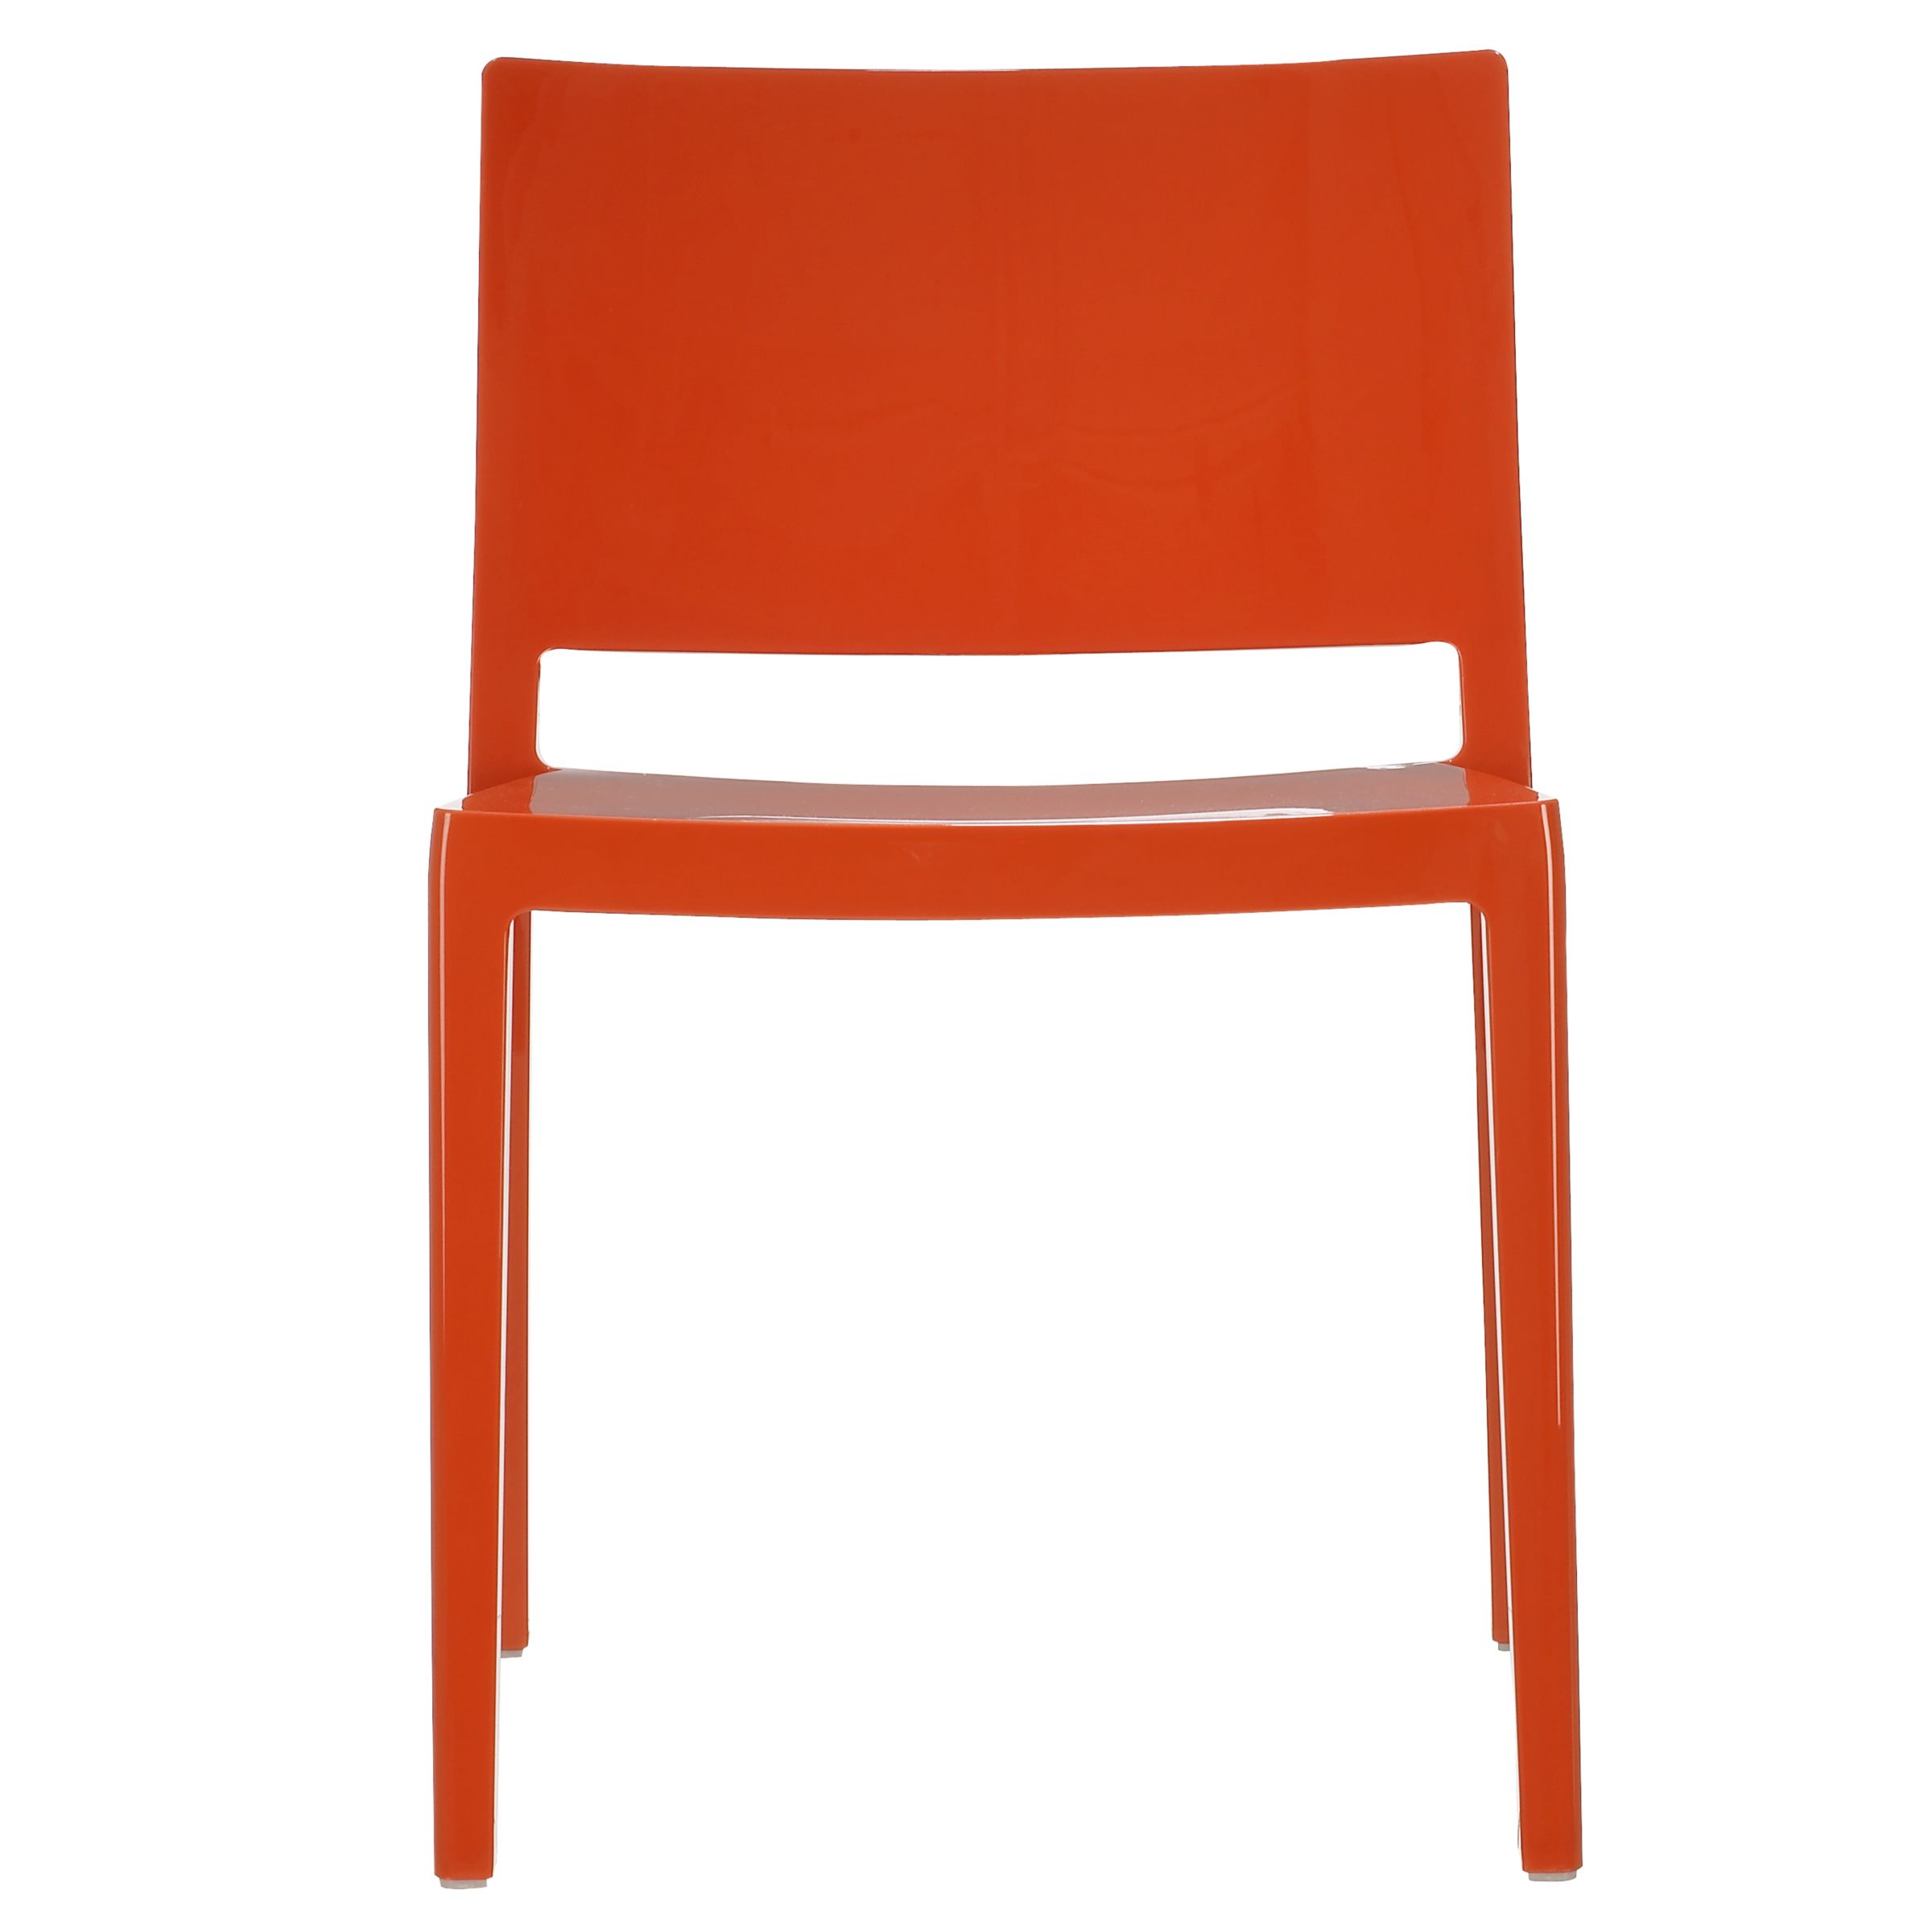 Pierro Lissoni for Kartell Lizz Chair, Orange at JohnLewis